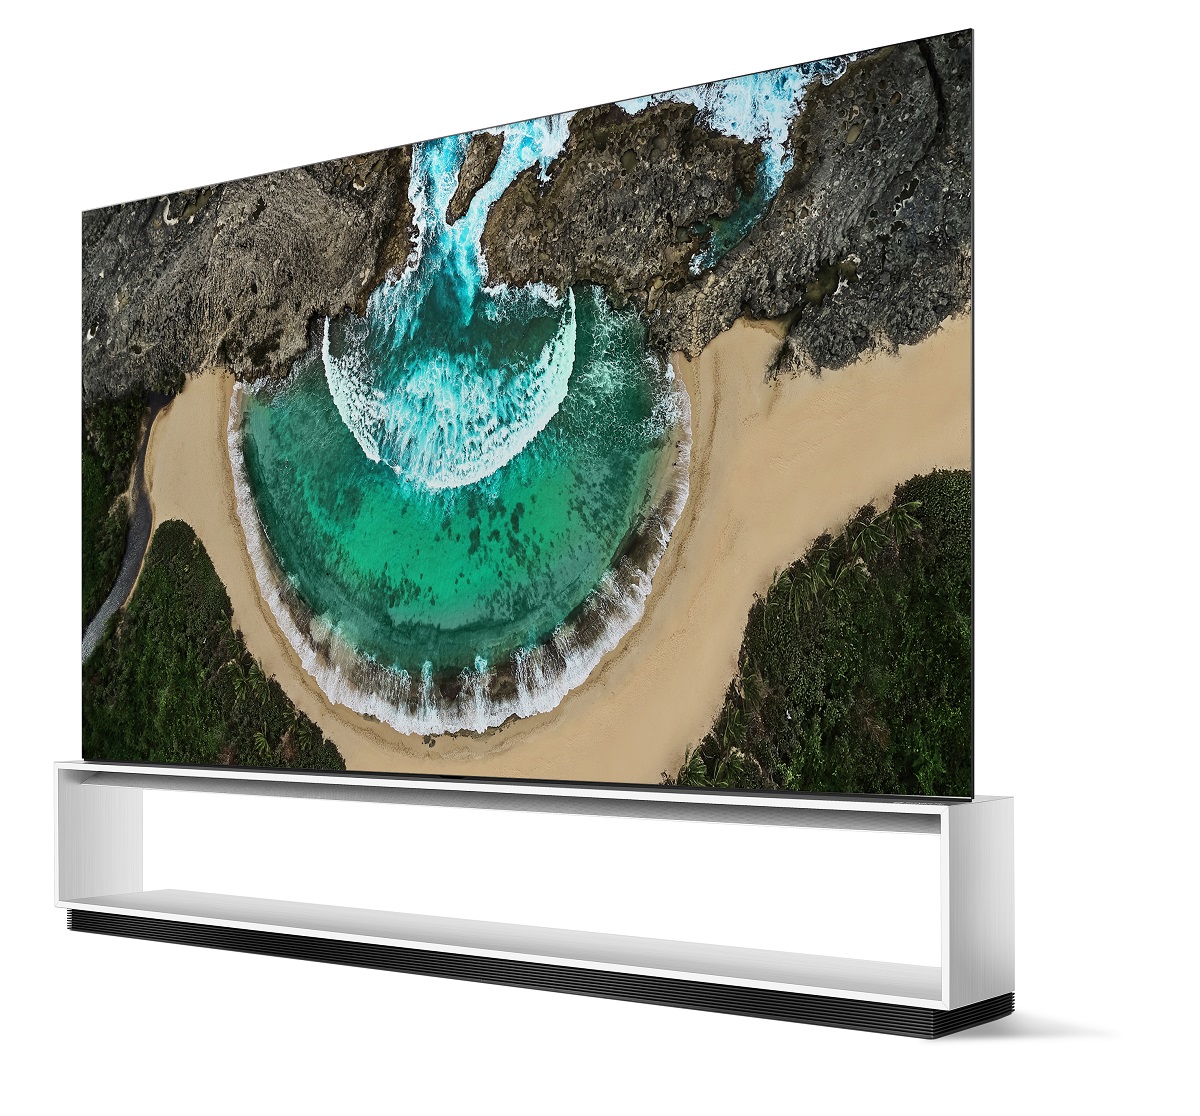 'CES 2020 혁신상' 2관왕에 오른 세계 최초 8K 올레드 TV 'LG 시그니처 올레드 8K'